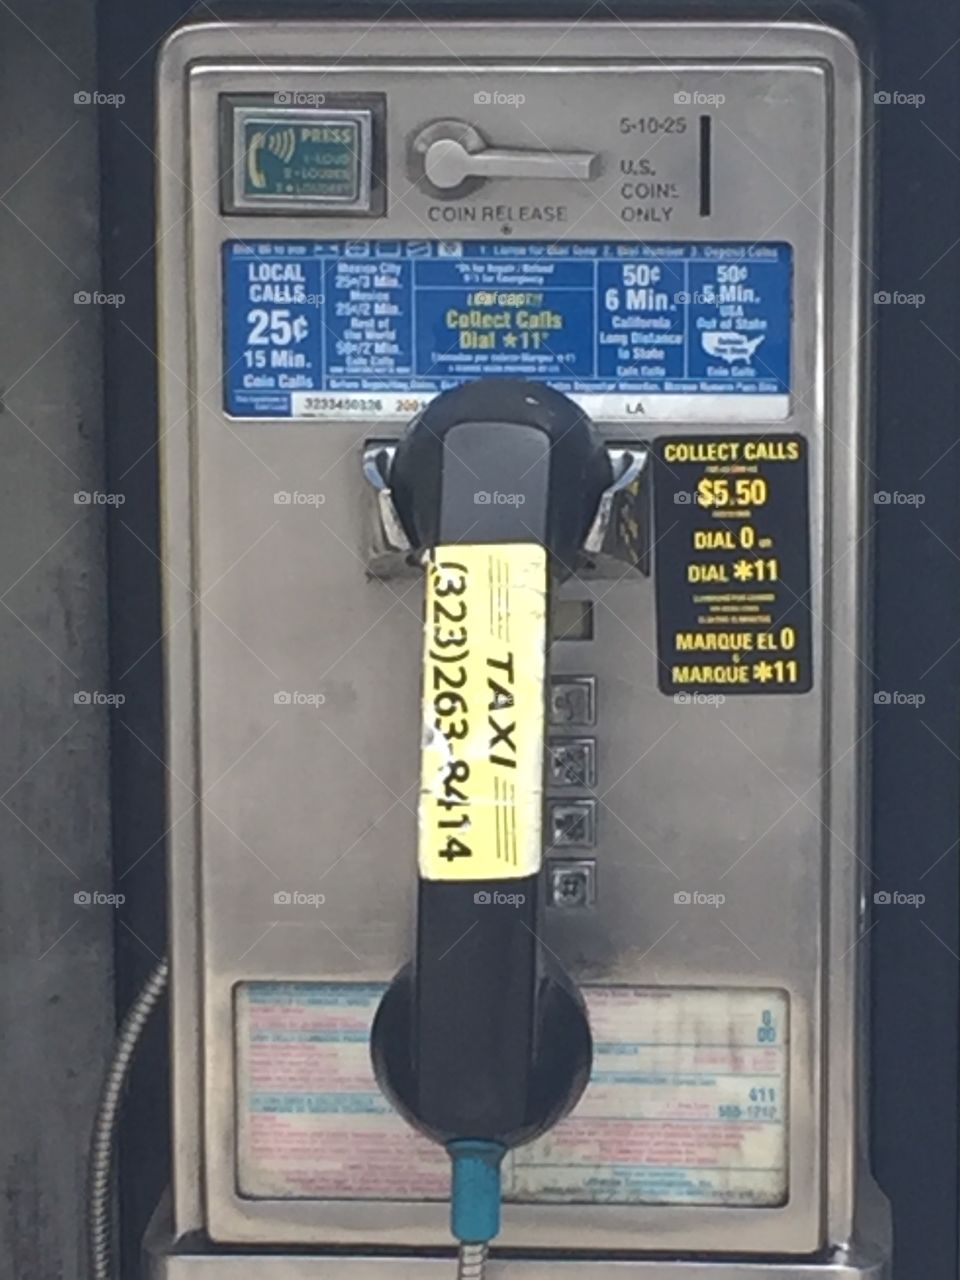 Public Pay phones??